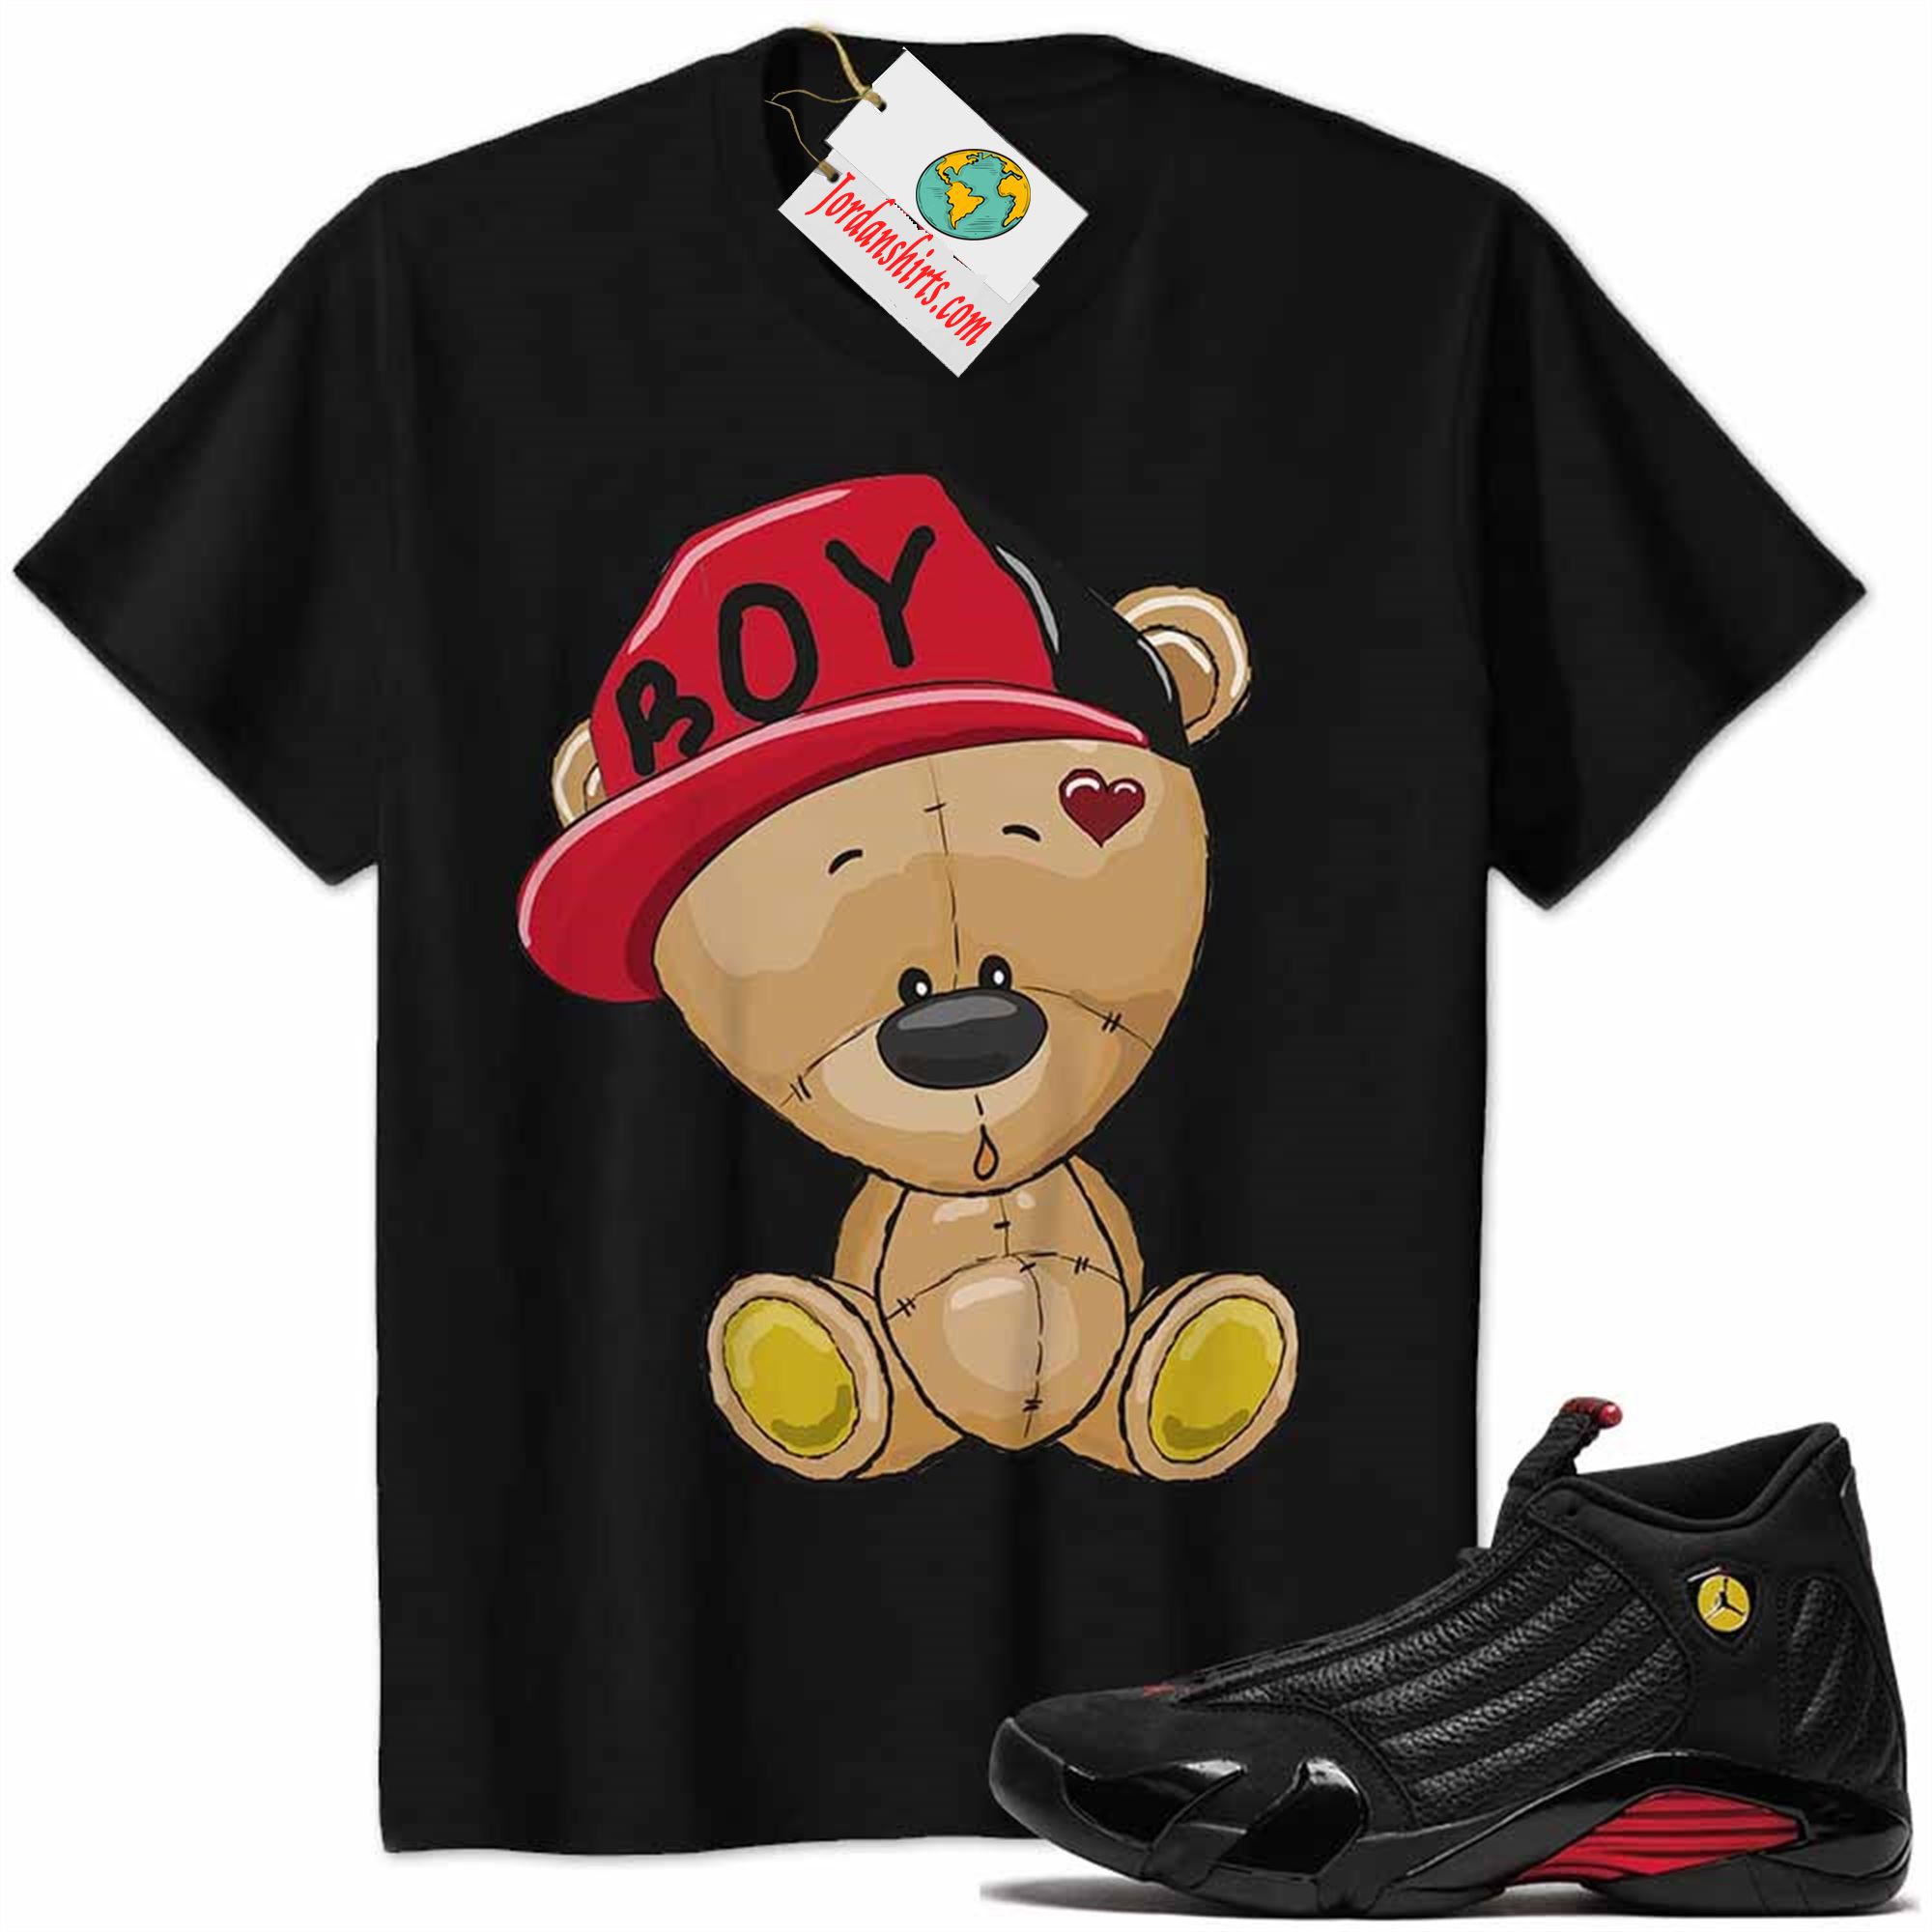 Jordan 14 Shirt, Jordan 14 Last Shot Shirt Cute Baby Teddy Bear Black Size Up To 5xl